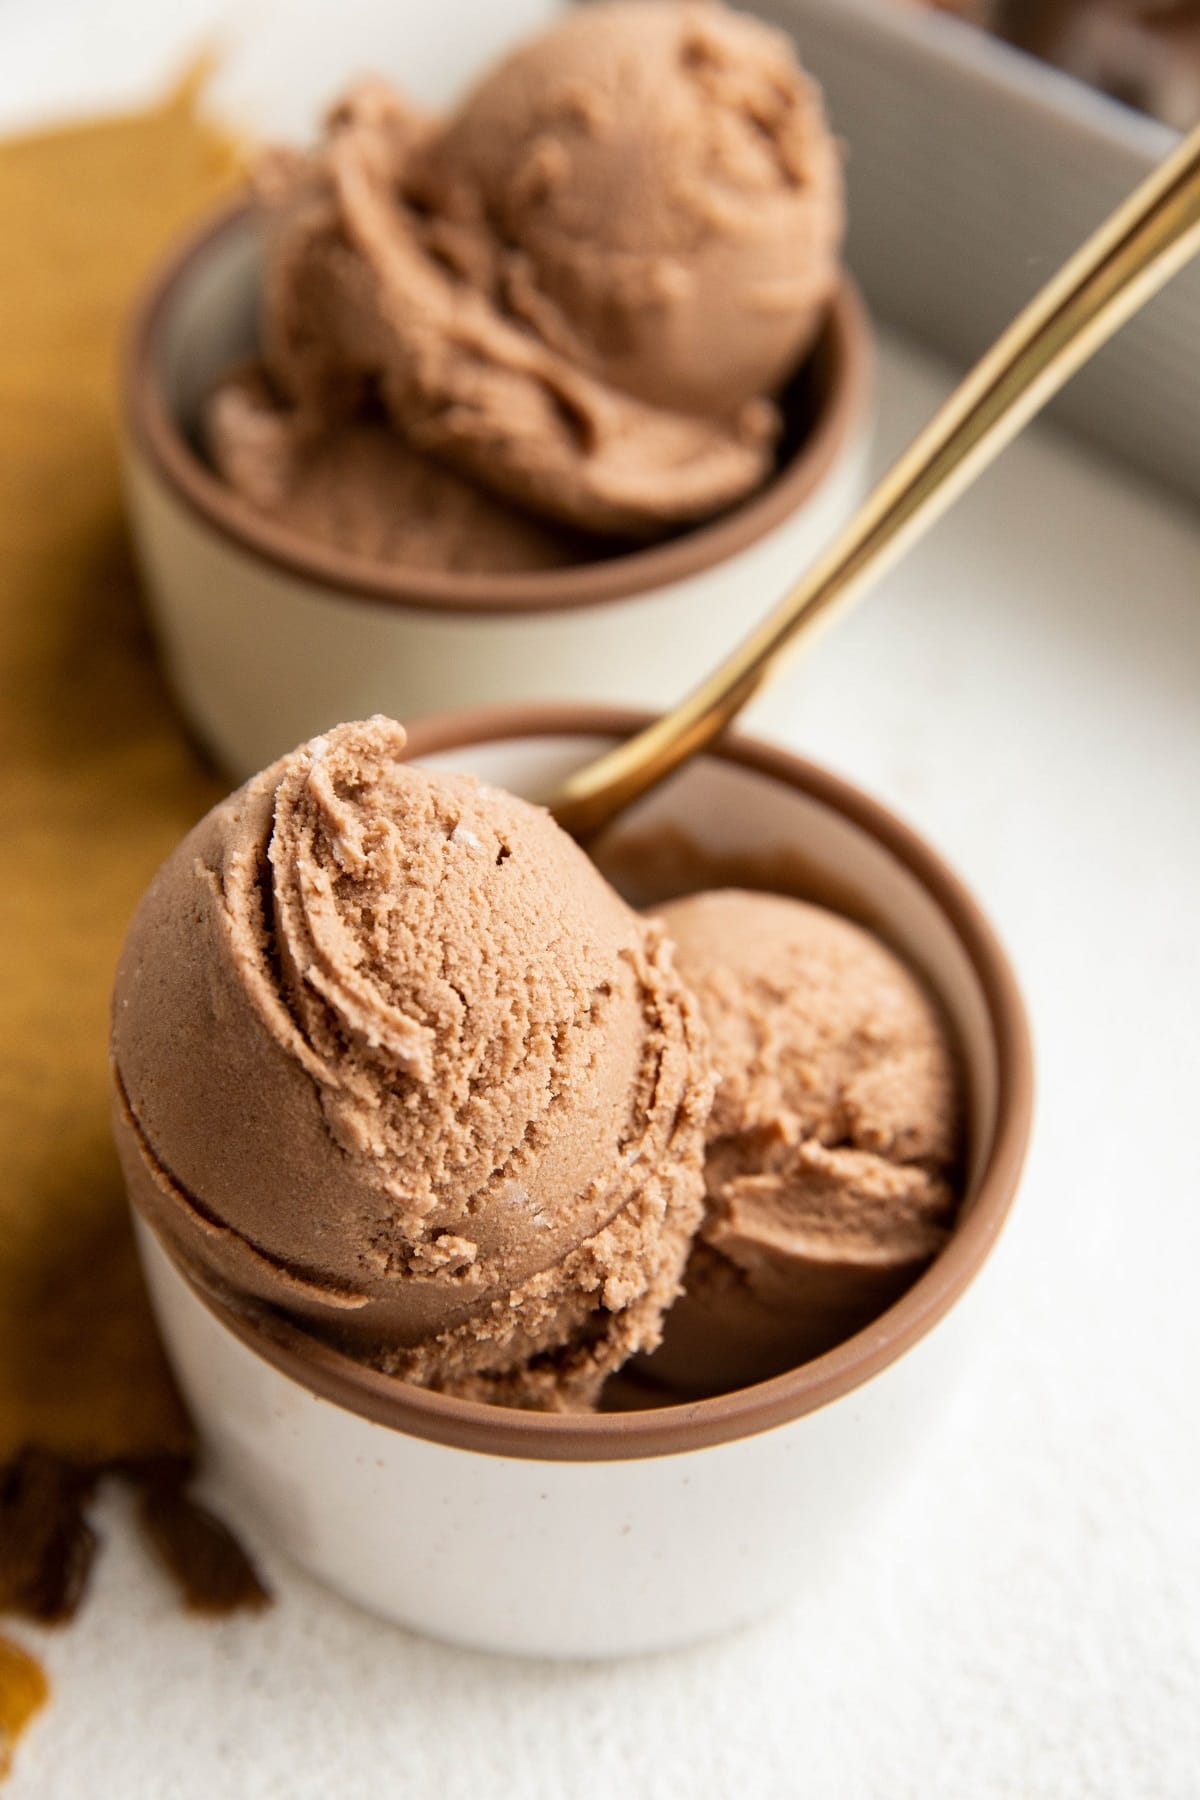 5 Low-Calorie Vegan Ice Cream Pints You Need in Your Freezer